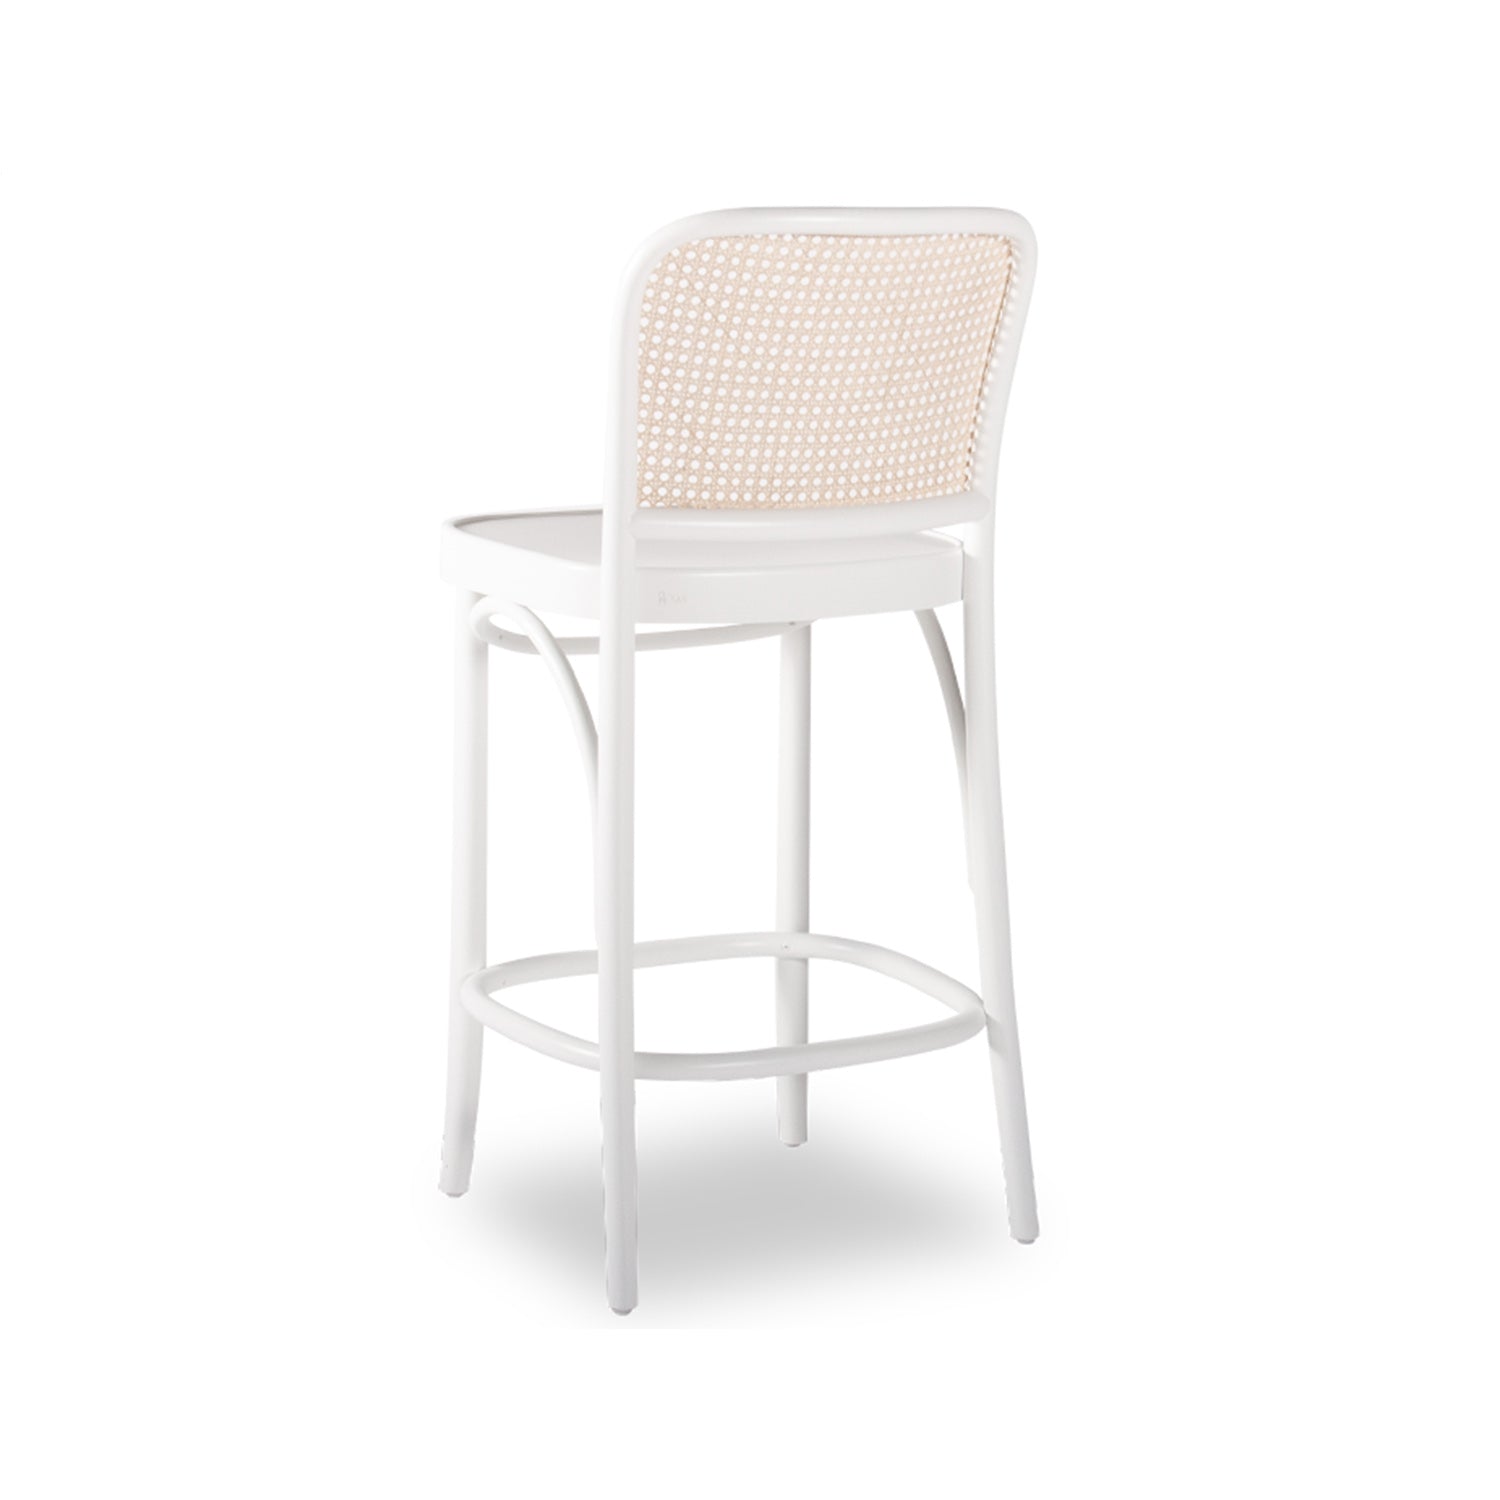 811 Hoffmann Bar Stool - Wood Seat/Cane Backrest (White)